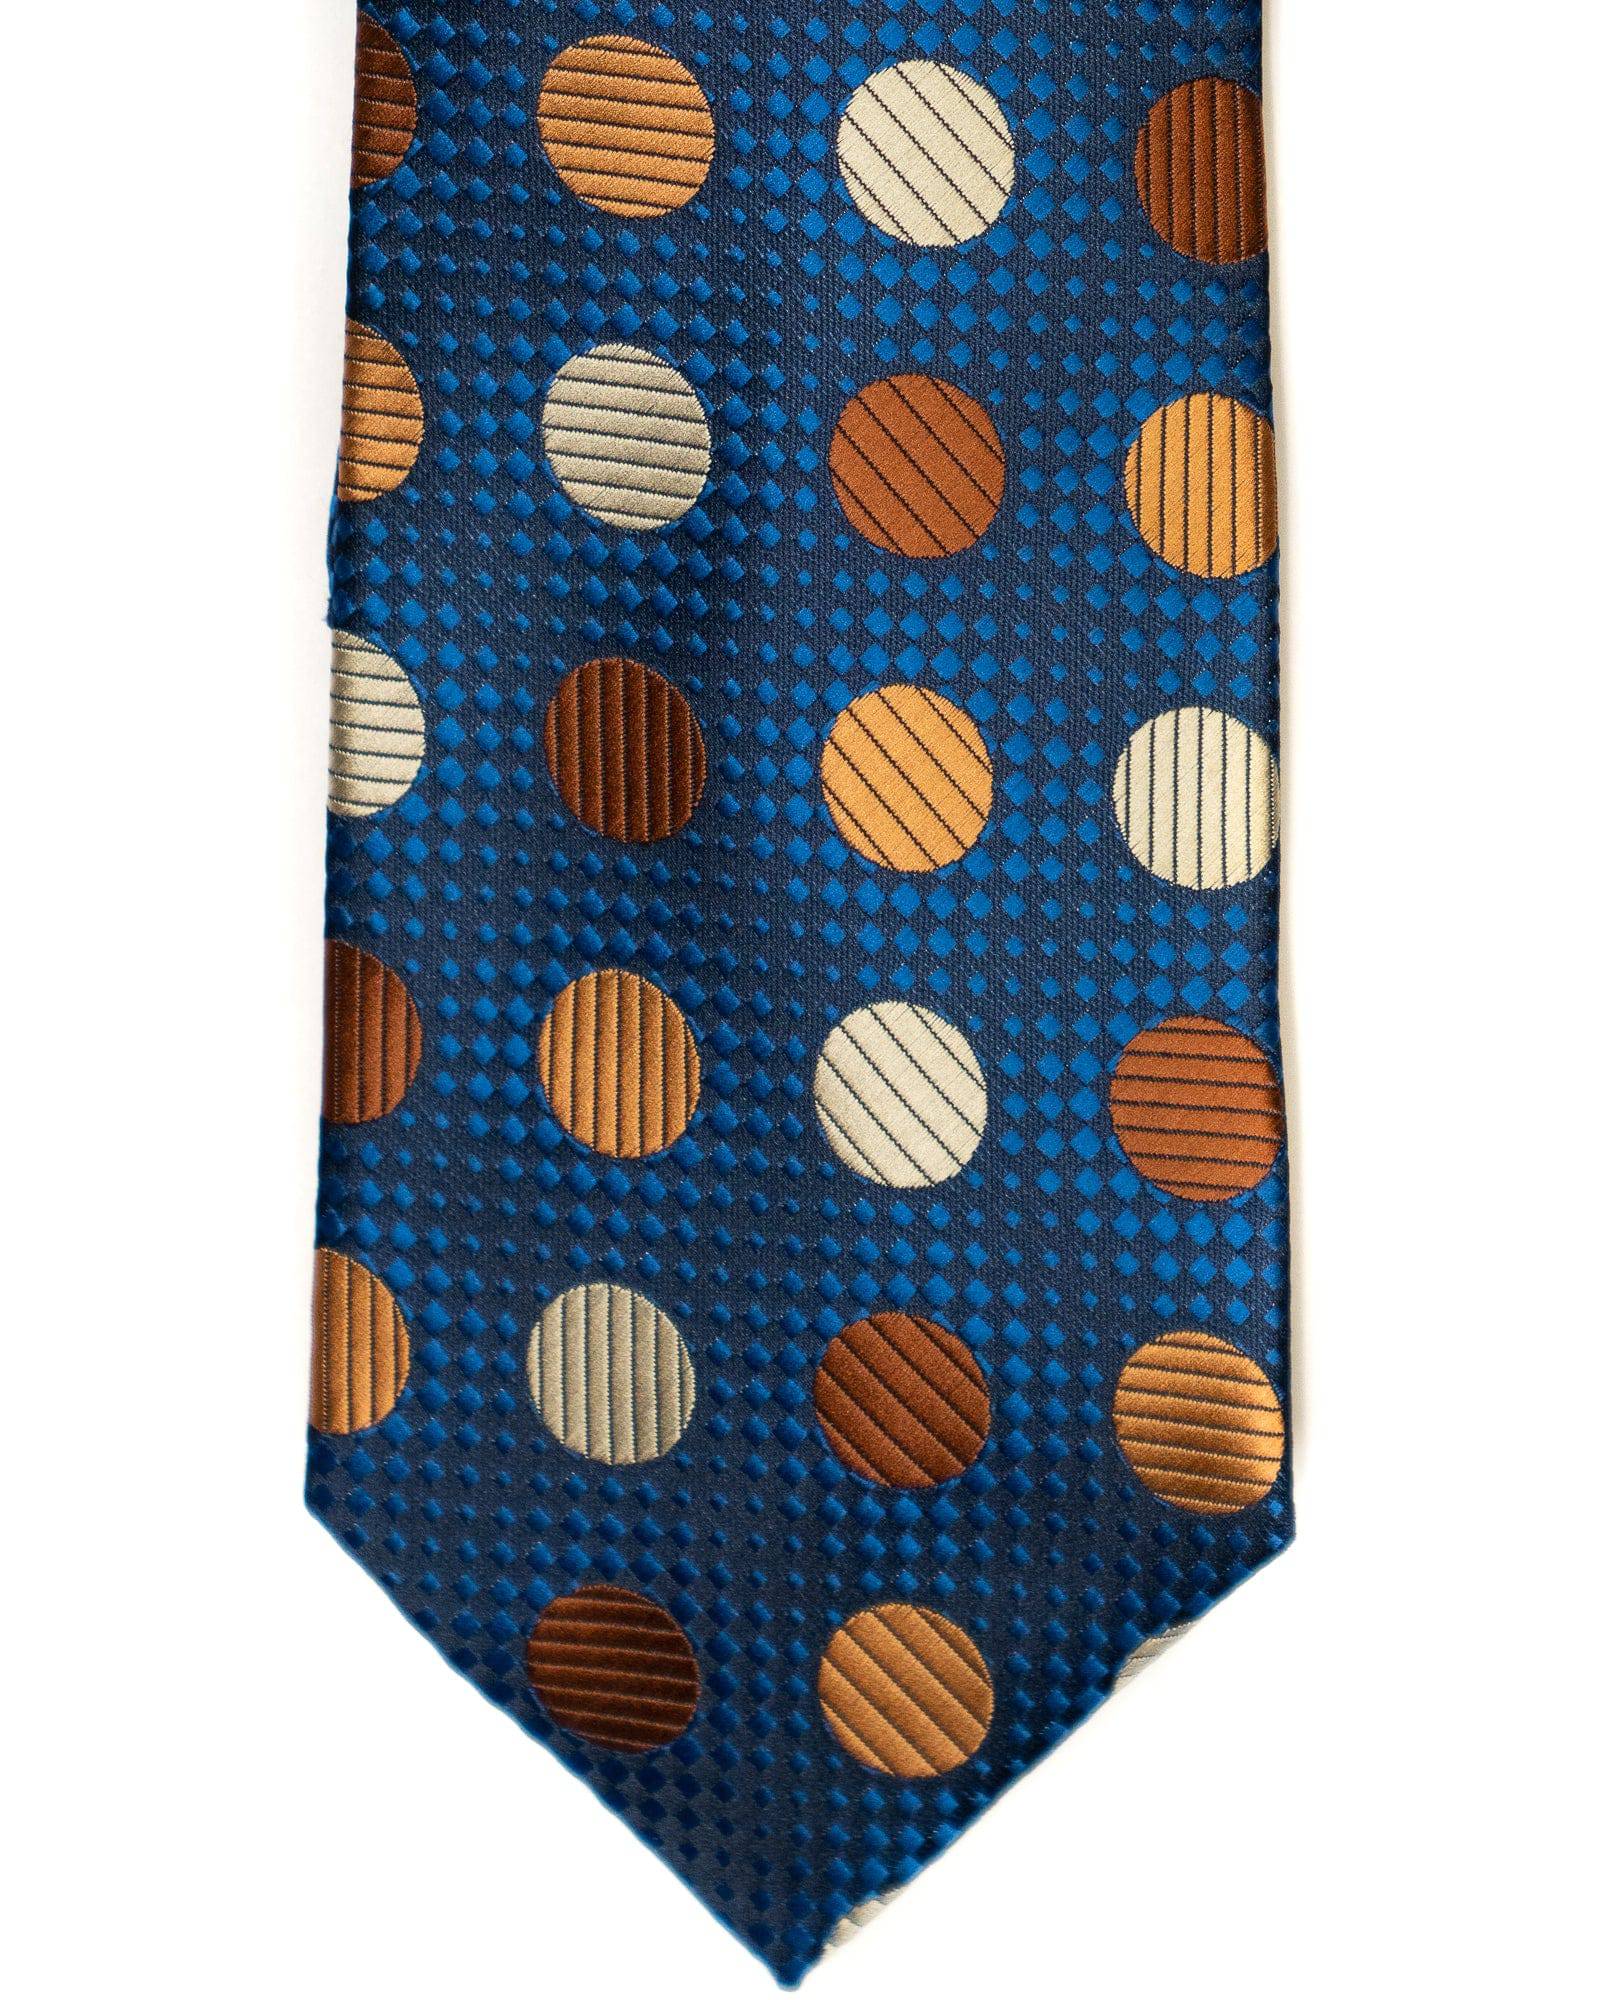 Venturi Uomo Dot Tie in Blue with Brown - Rainwater's Men's Clothing and Tuxedo Rental